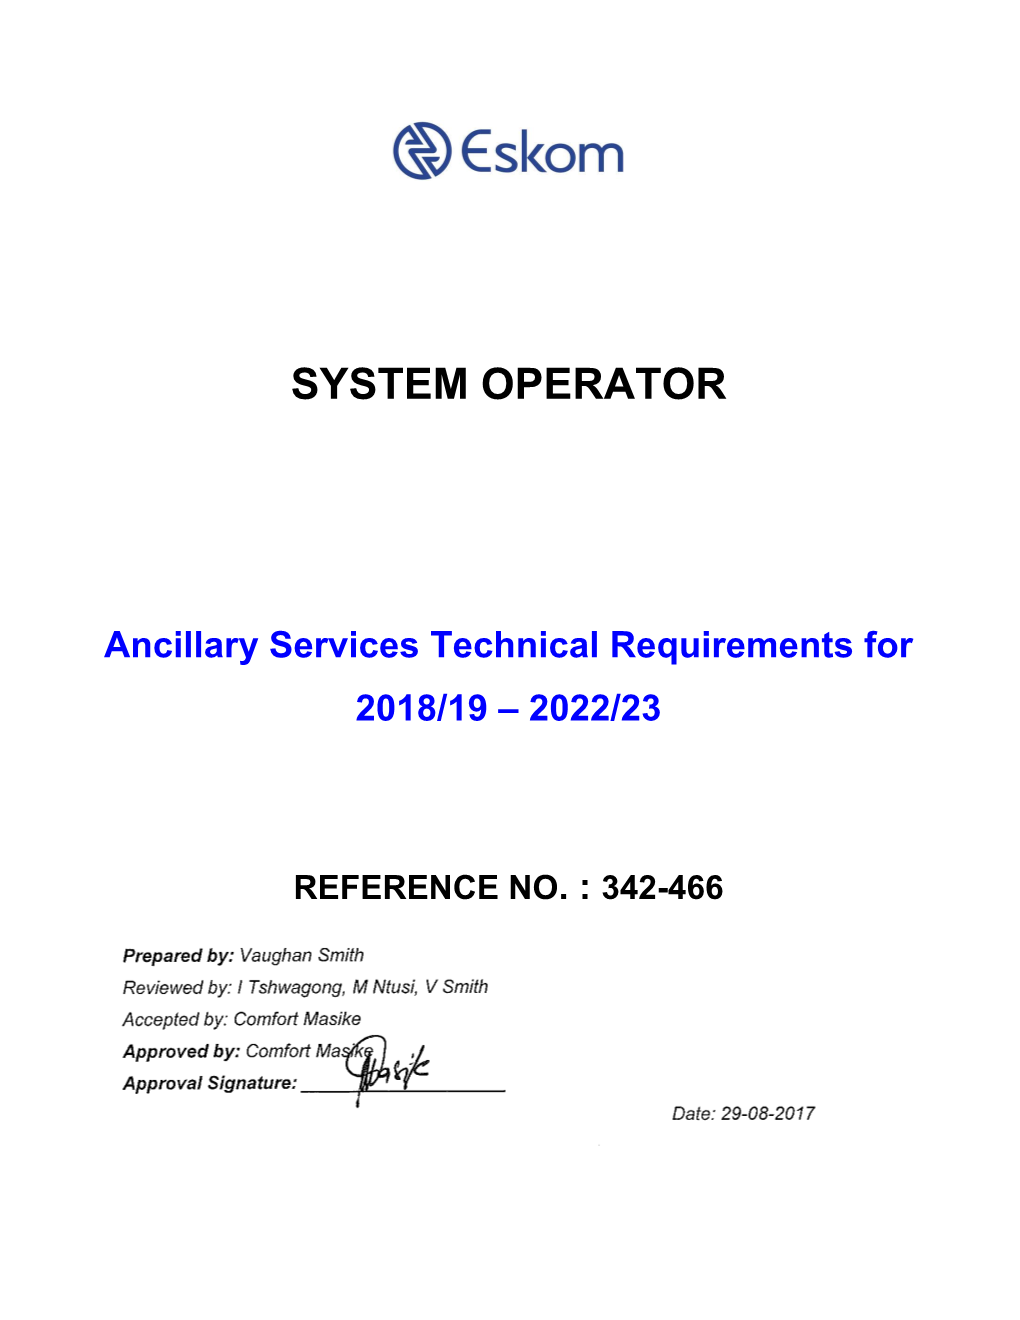 System Operator